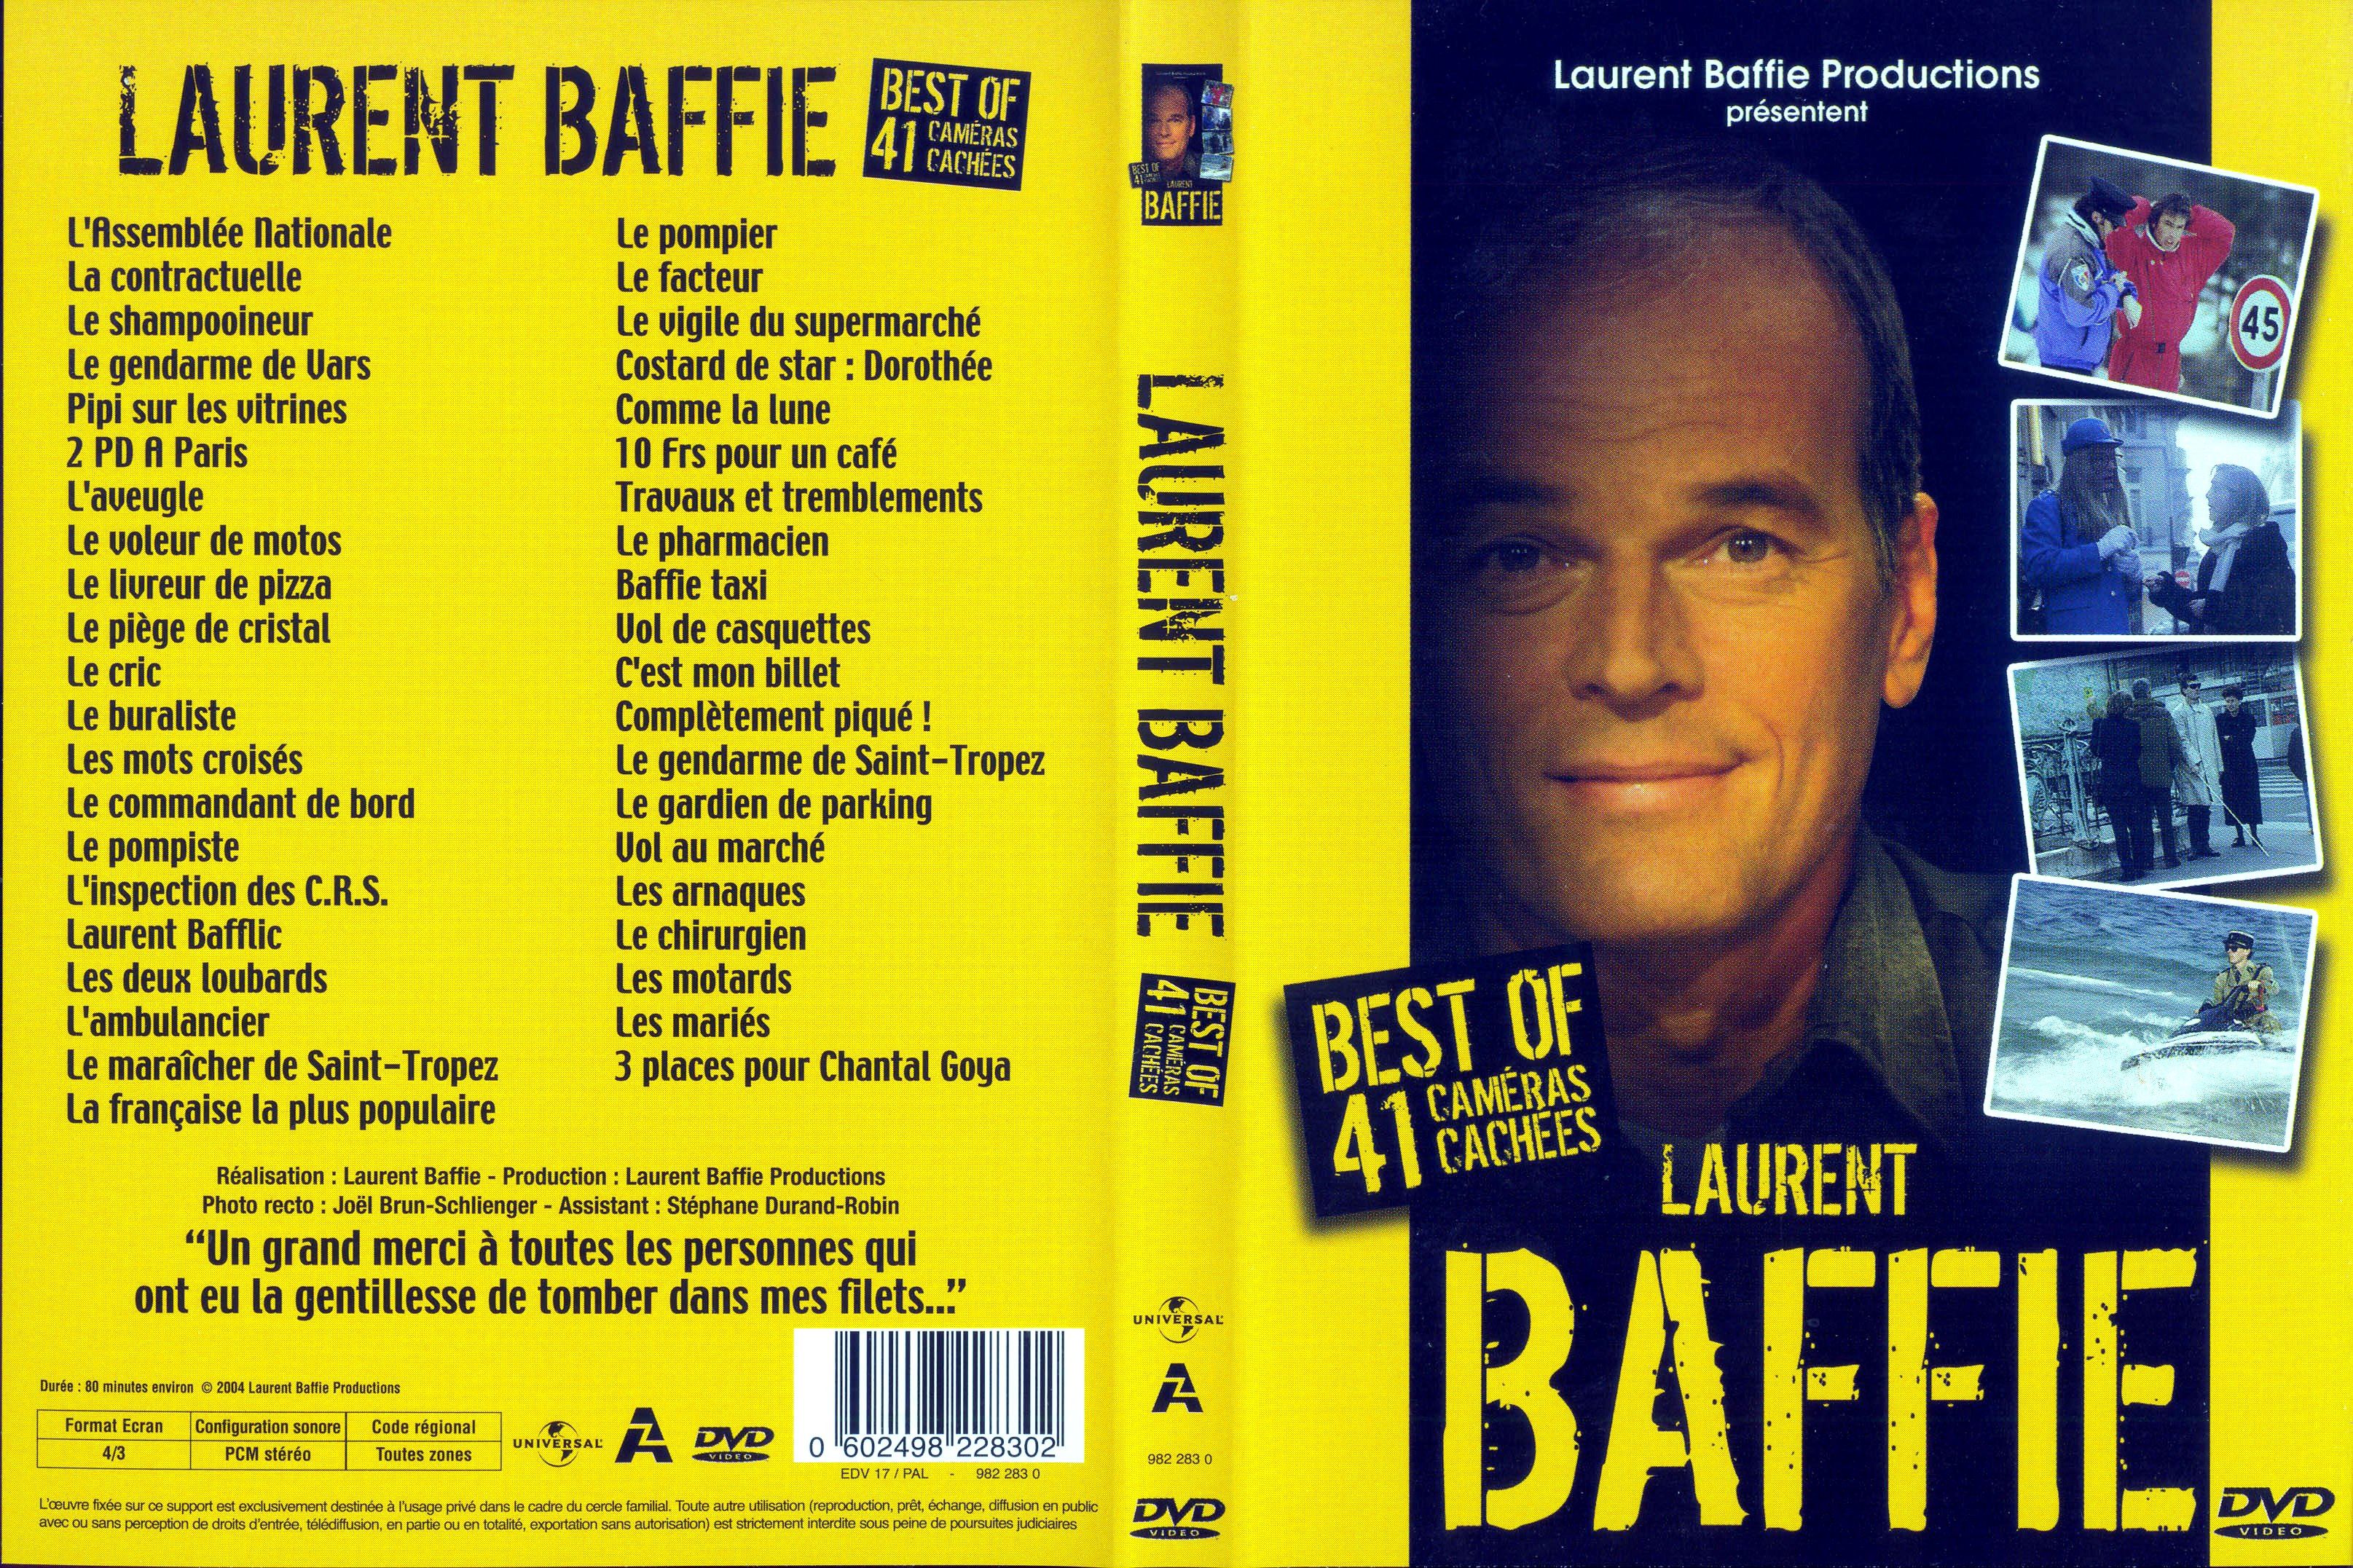 Jaquette DVD Laurent Baffie Best of 41 cameras caches